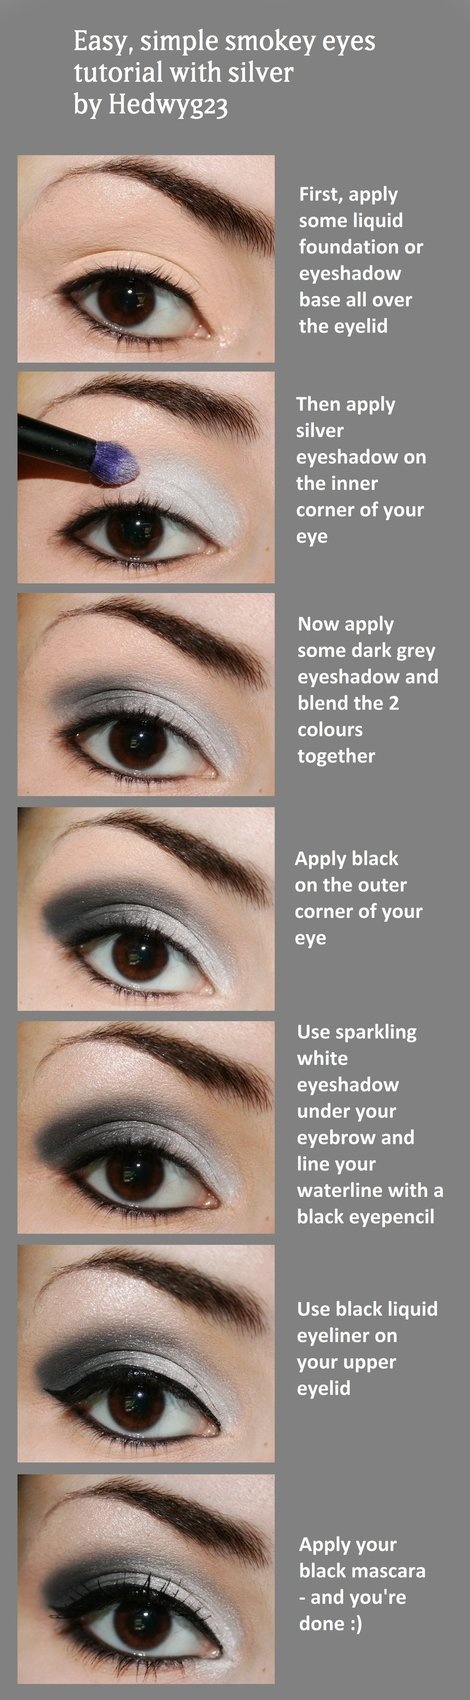 eye makeup application